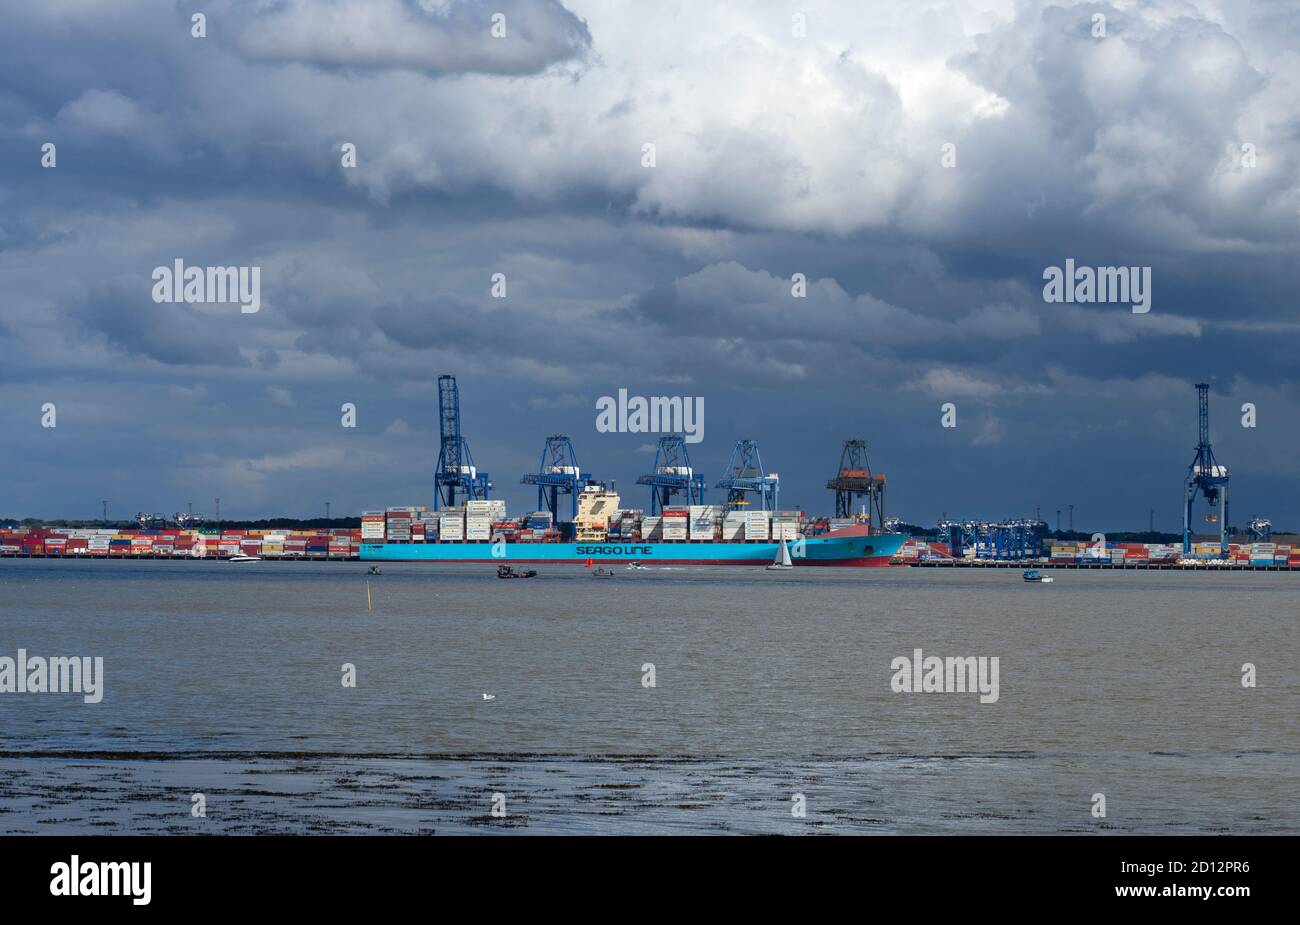 Navi portacontainer scaricate e caricate a Felixstowe Port, Essex, Inghilterra Foto Stock